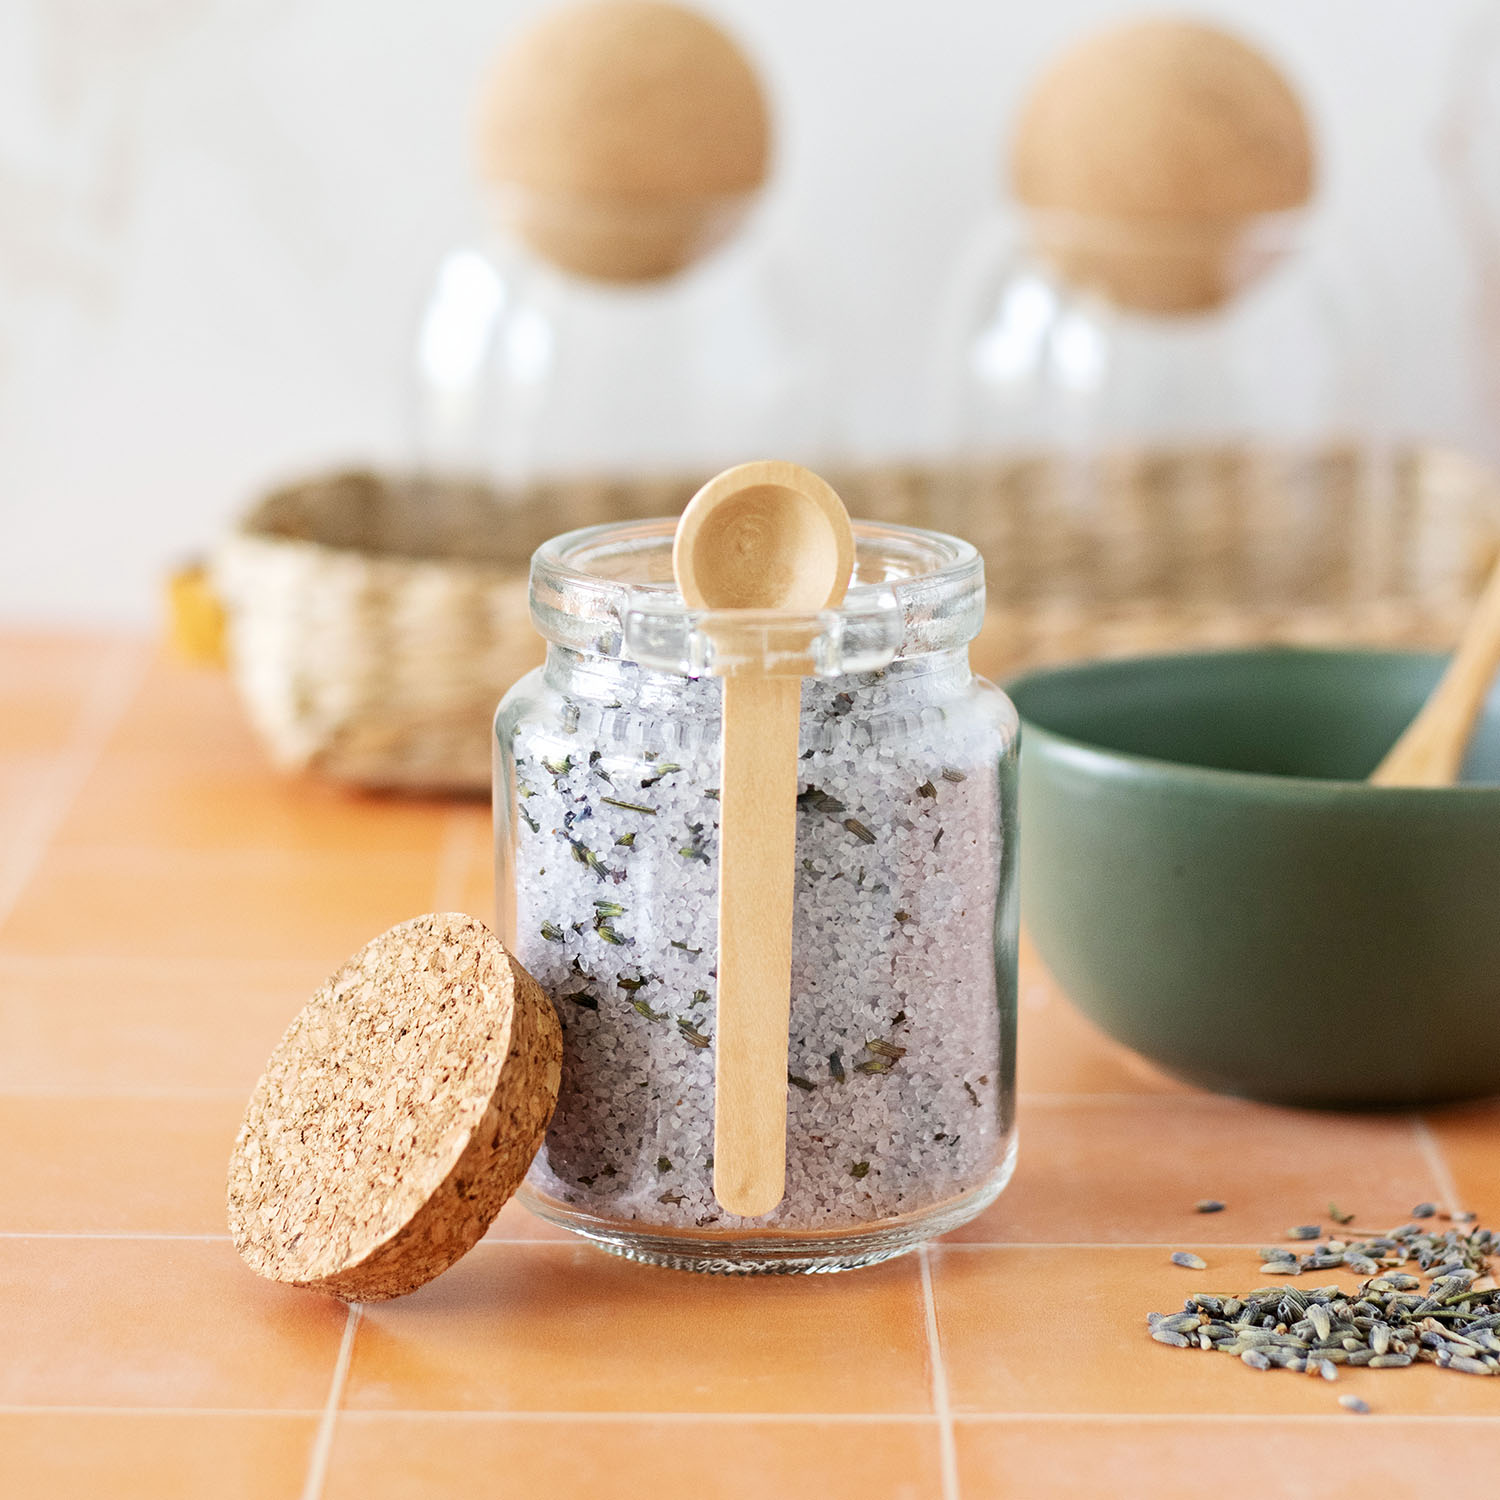 Cedarwood and Lavender Bath Salts Recipe